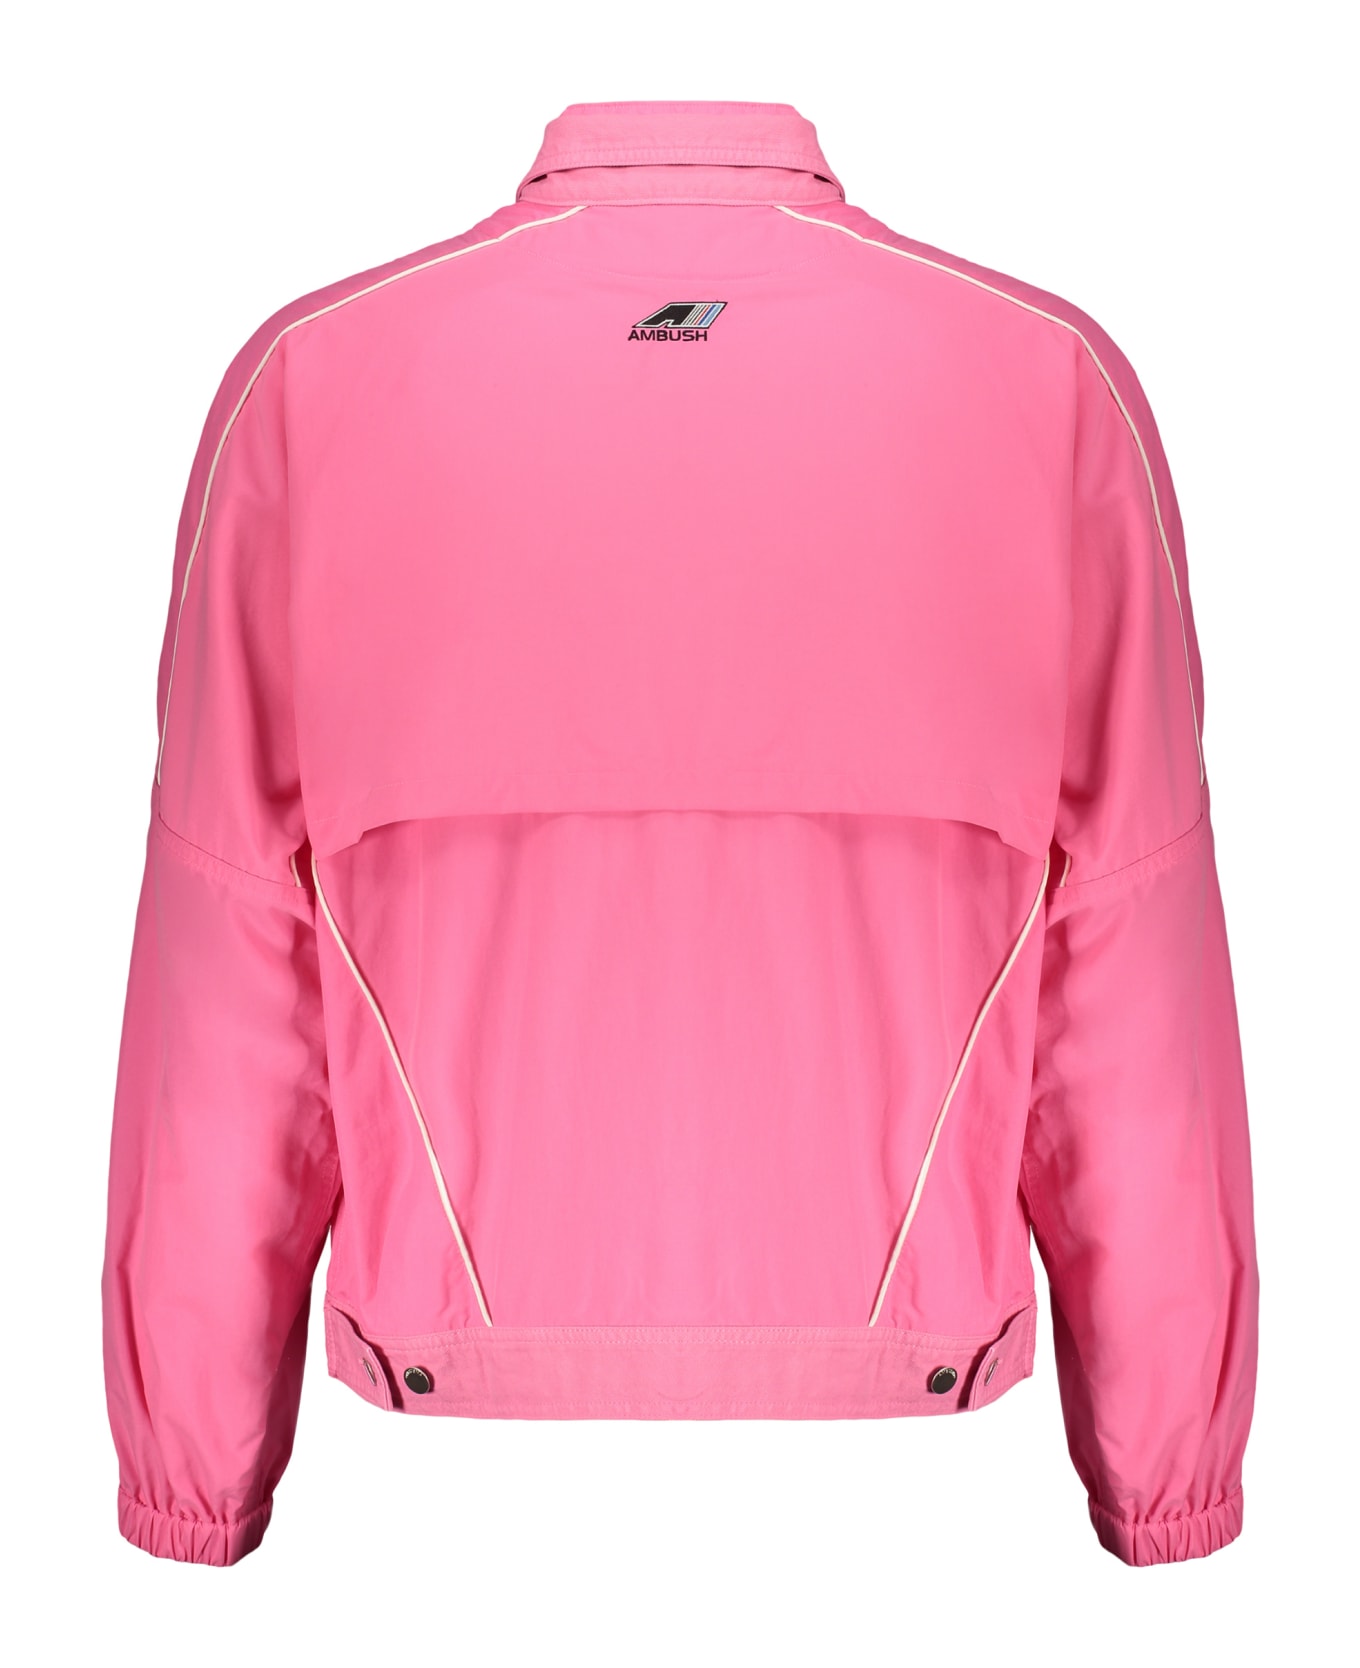 AMBUSH Nylon Jacket - Pink レインコート